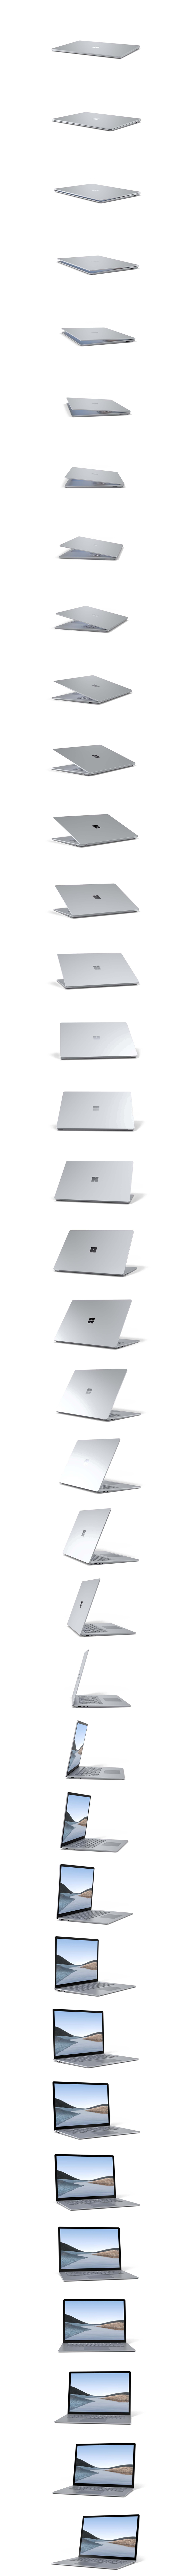 Surface Laptop 3 260-Drehung